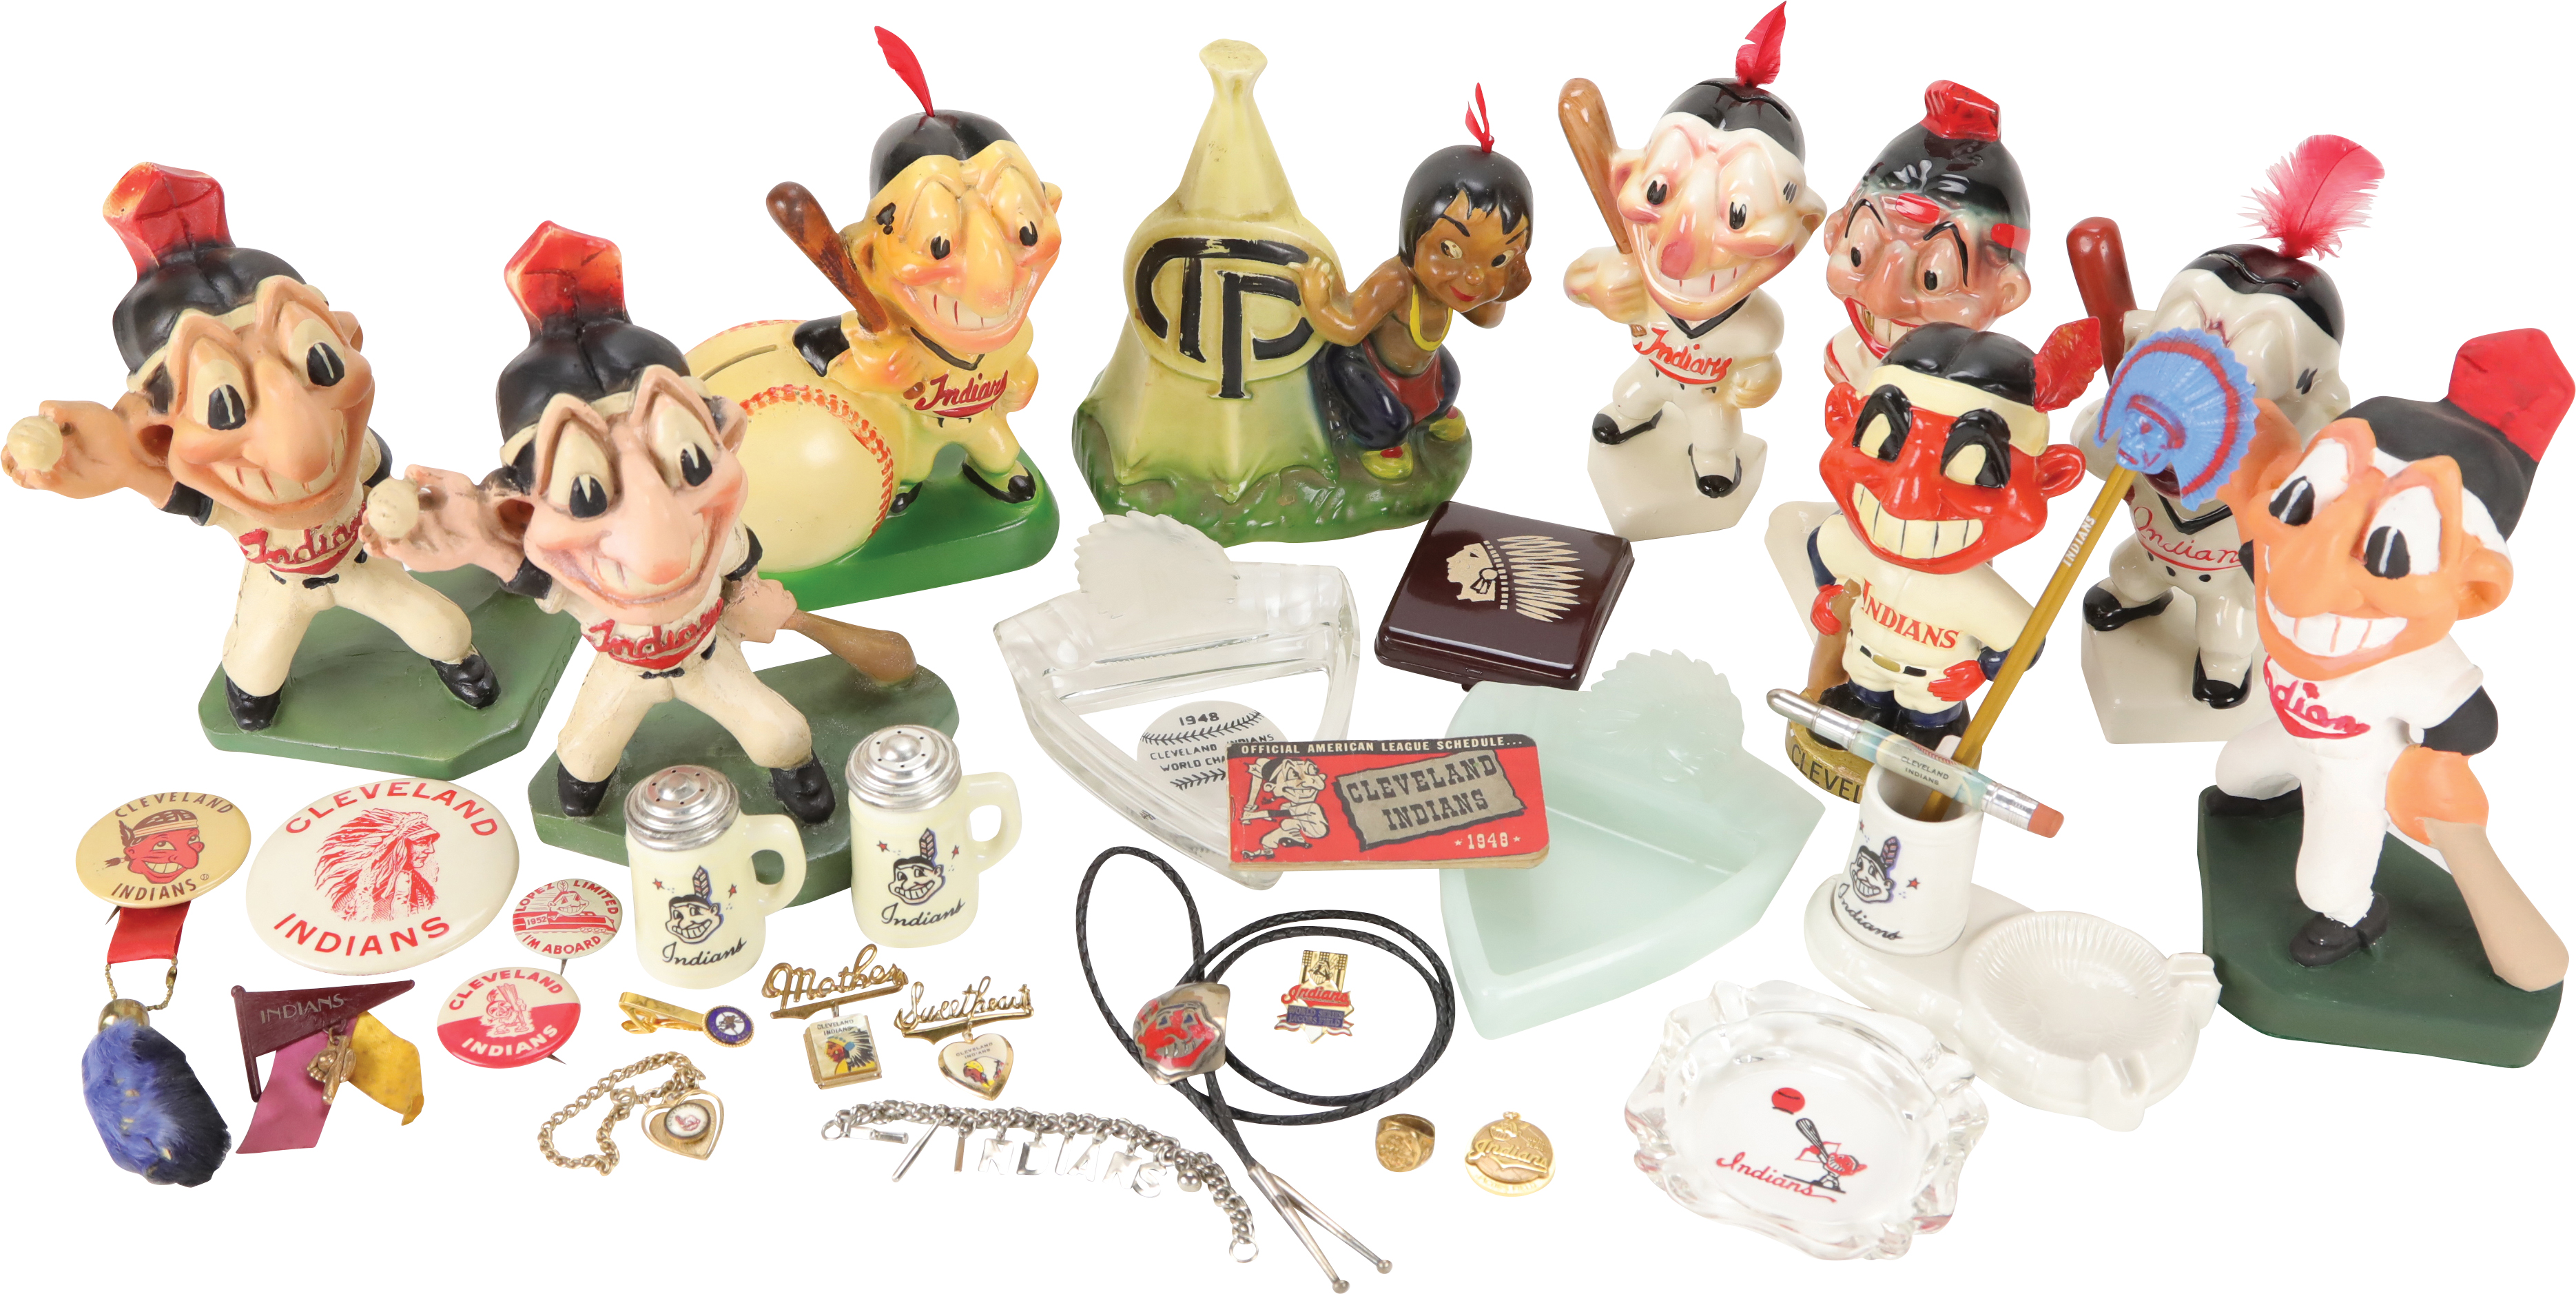 Classic Cleveland baseball memorabilia at auction – baseballs, photos,  letter, banner, more - cleveland.com